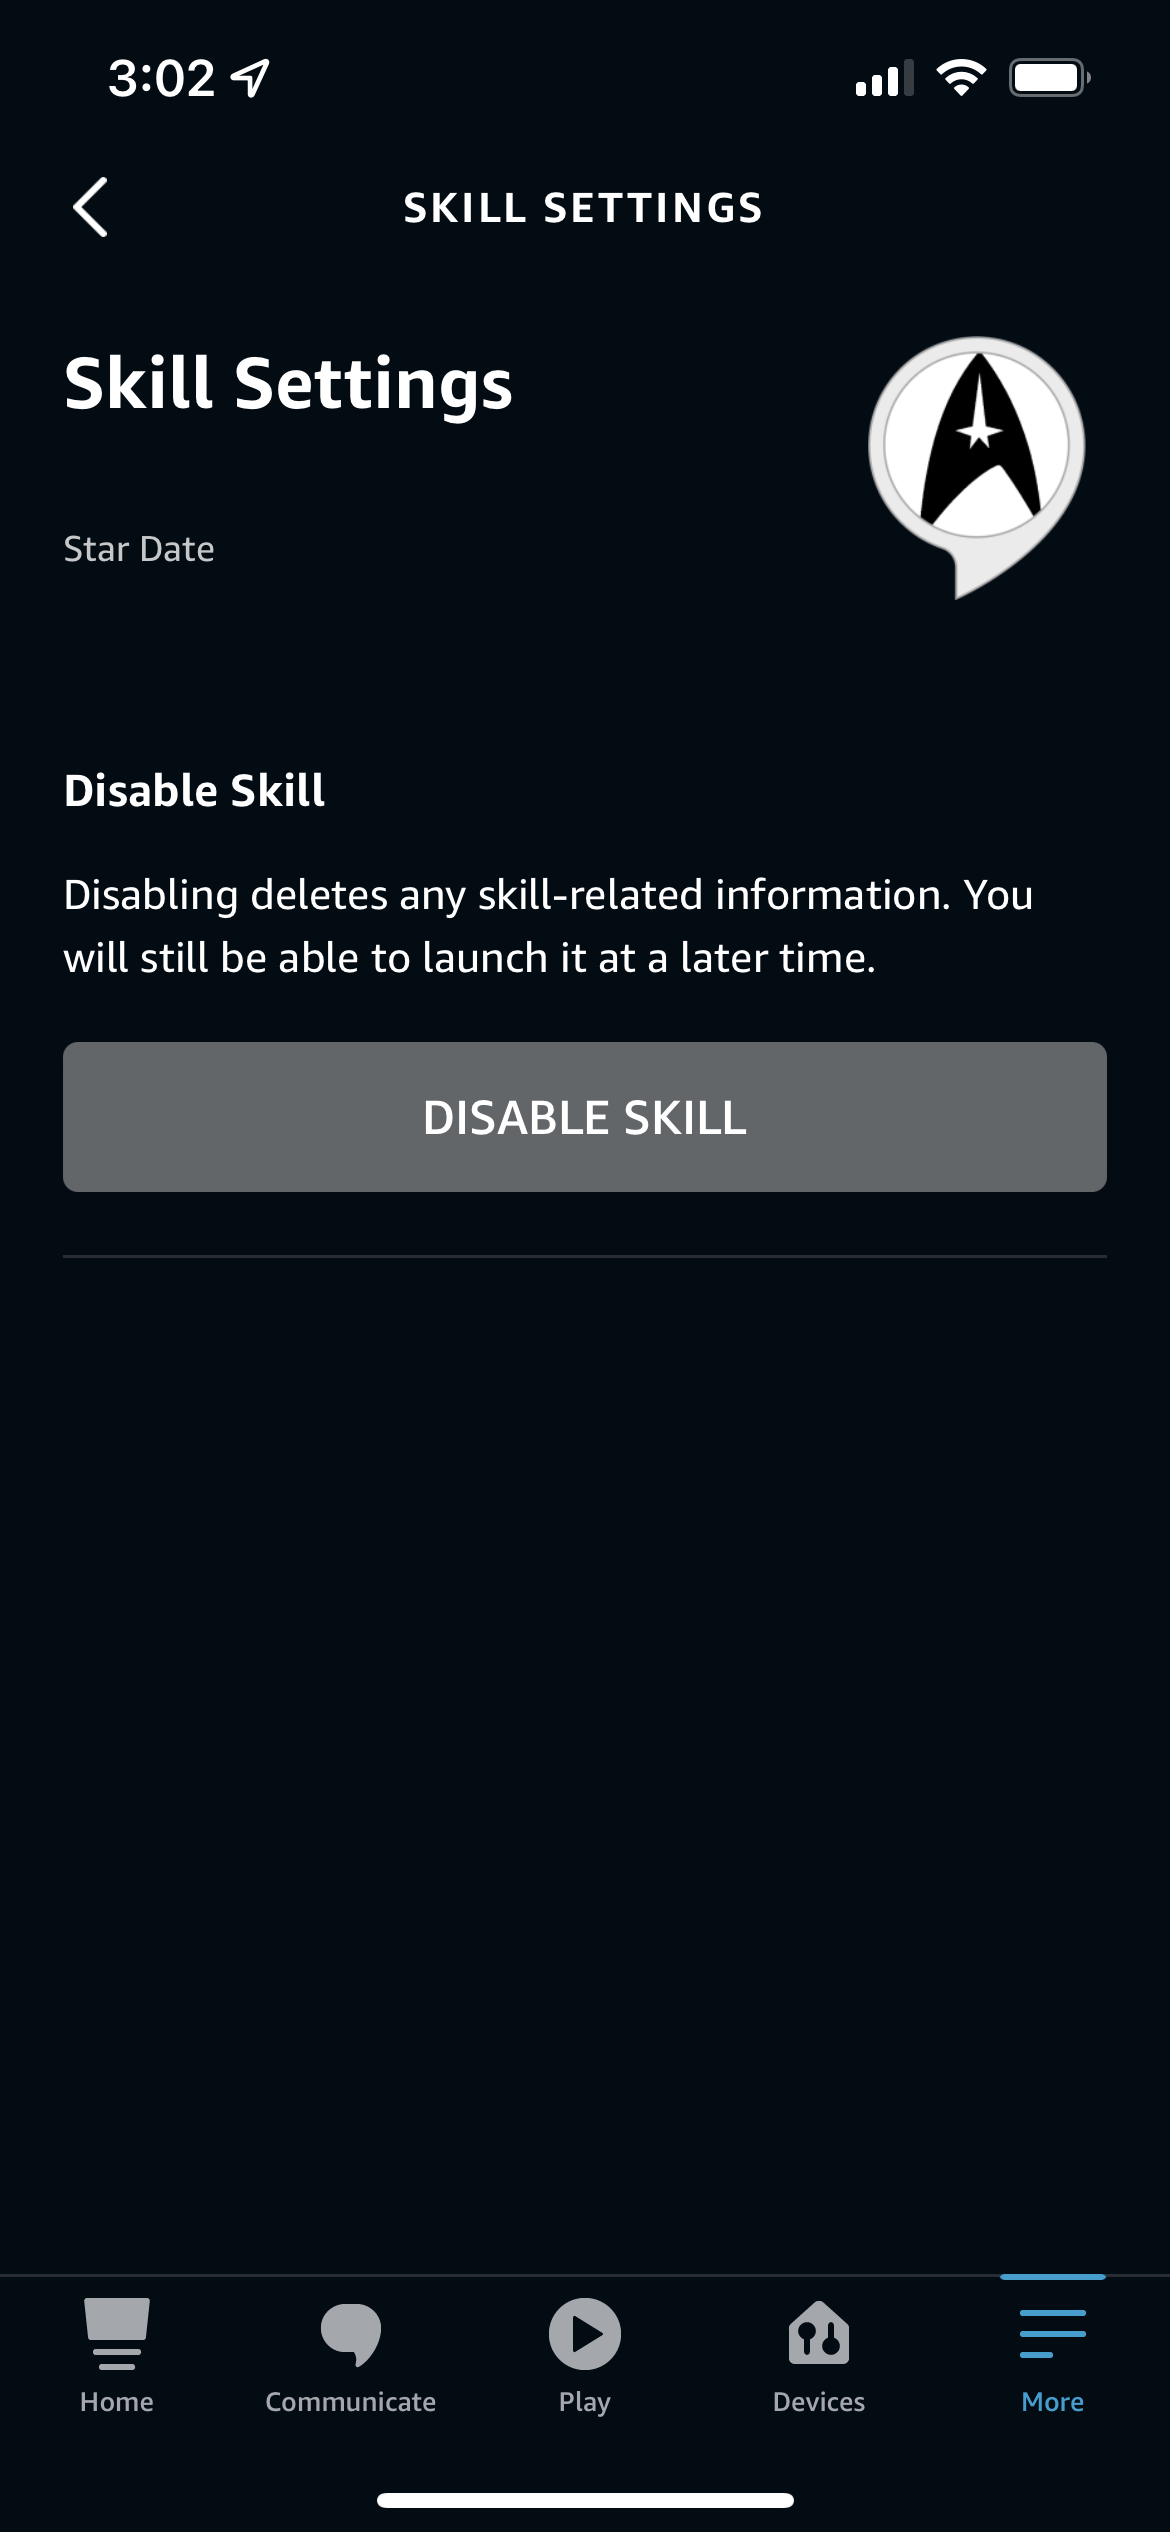 Disabling a skill in the Alexa app